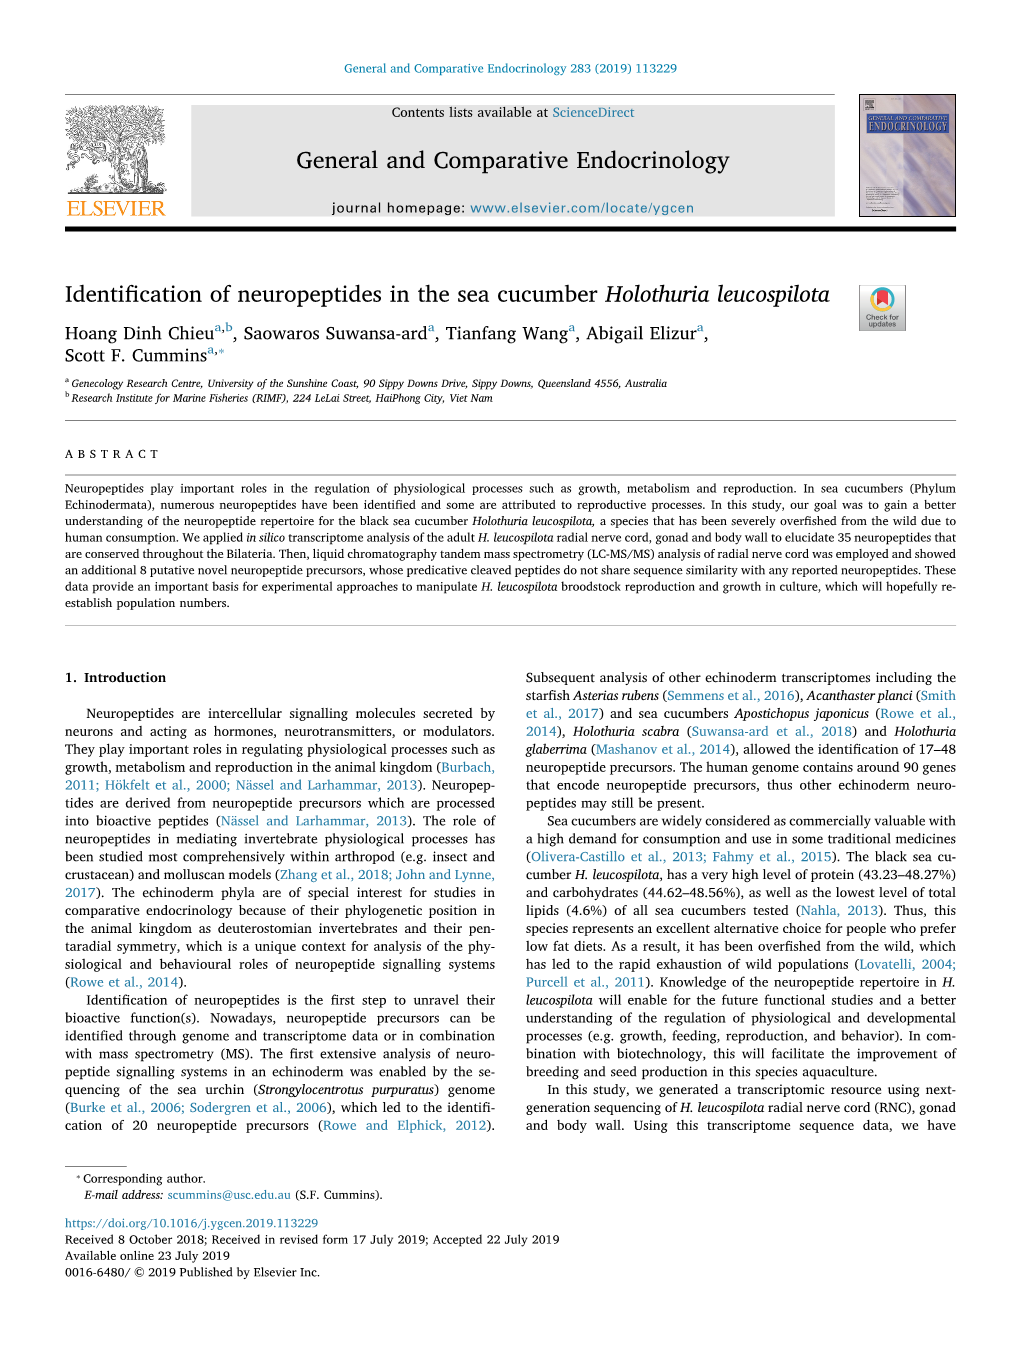 Identification of Neuropeptides in the Sea Cucumber Holothuria Leucospilota